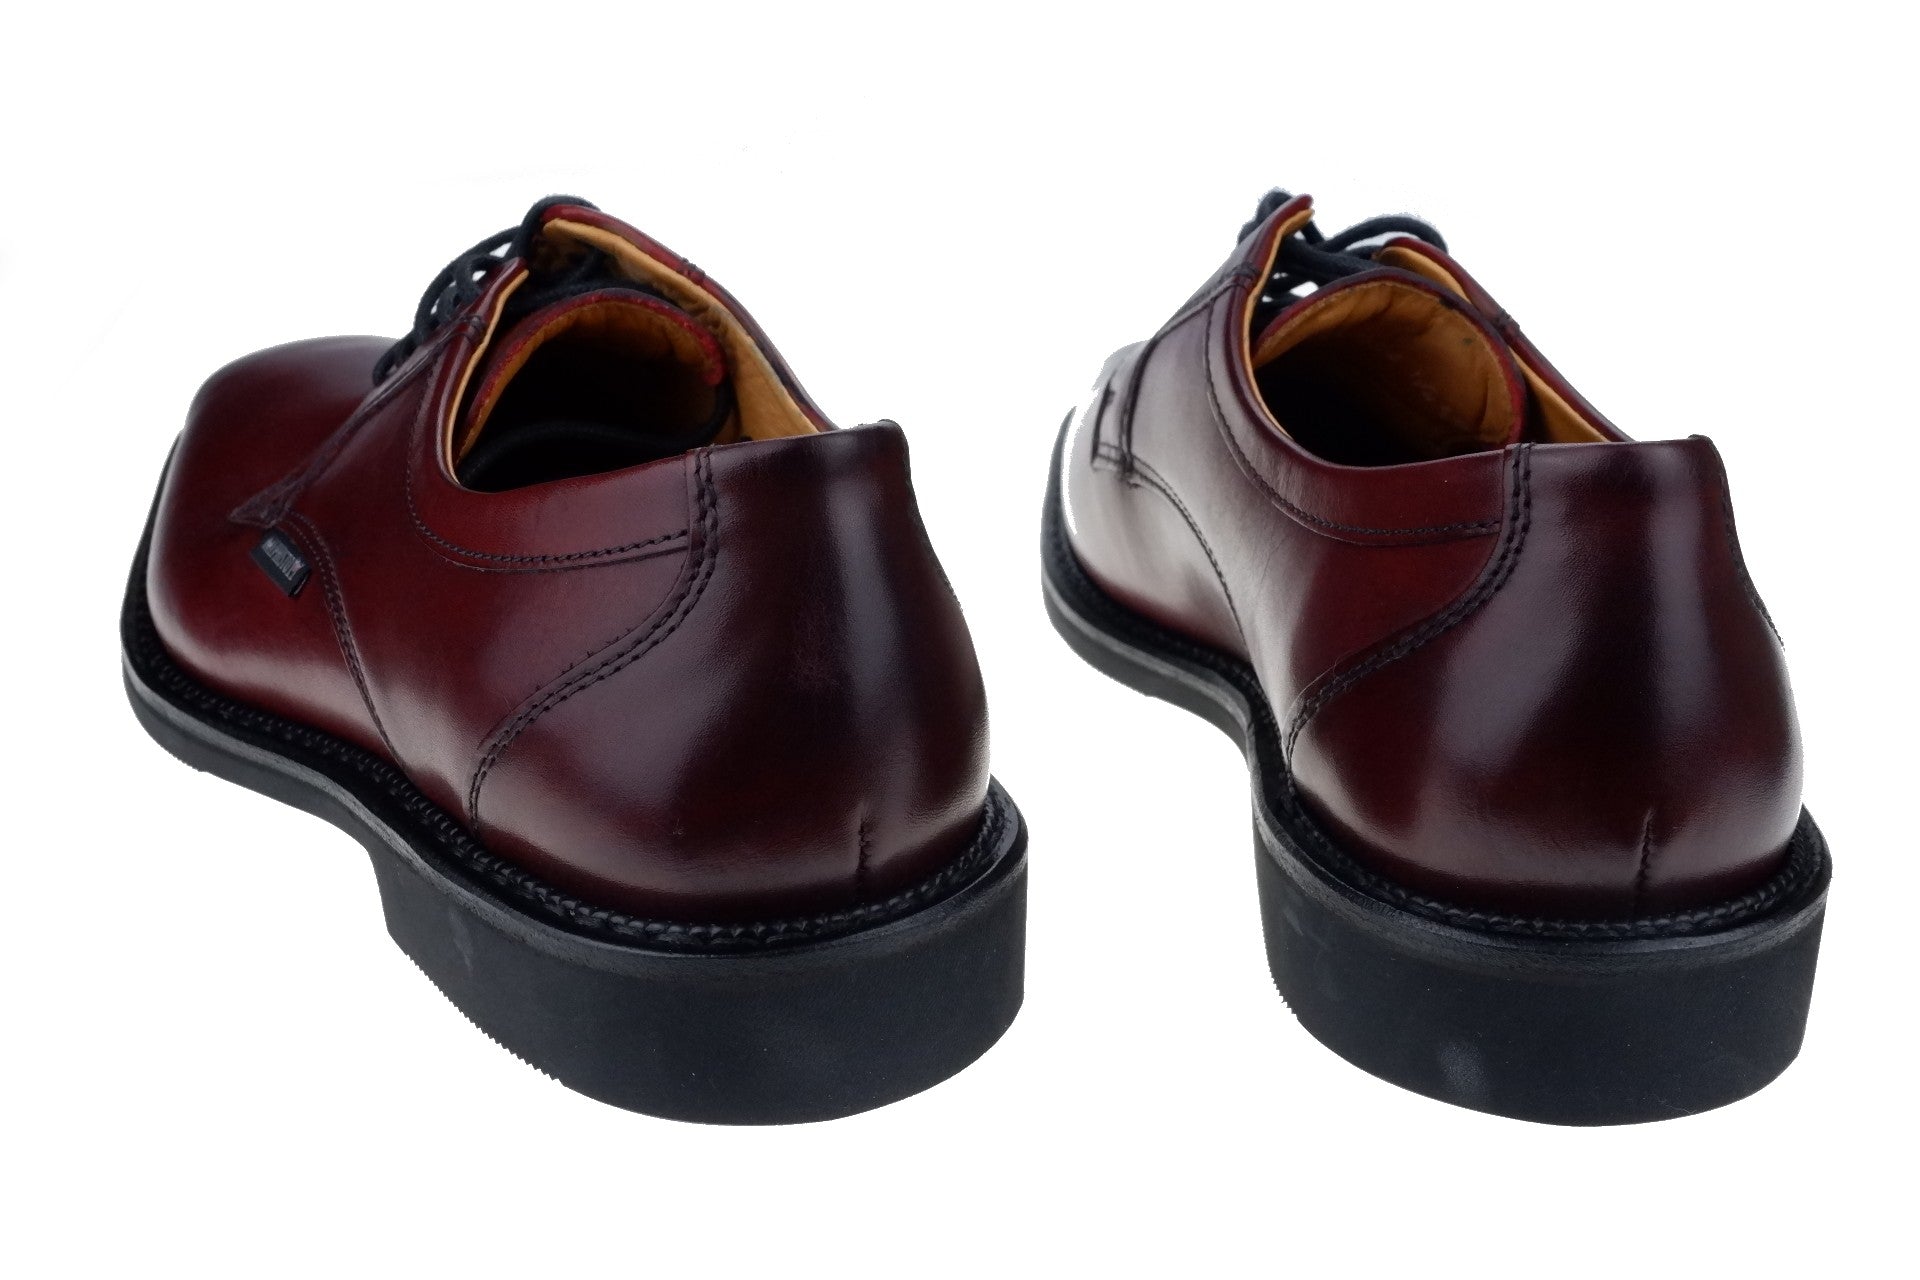 'PEDRO' men's goodyear handmade smart city shoe - Mephisto - Chaplinshoes'PEDRO' men's goodyear handmade smart city shoe - MephistoMephisto